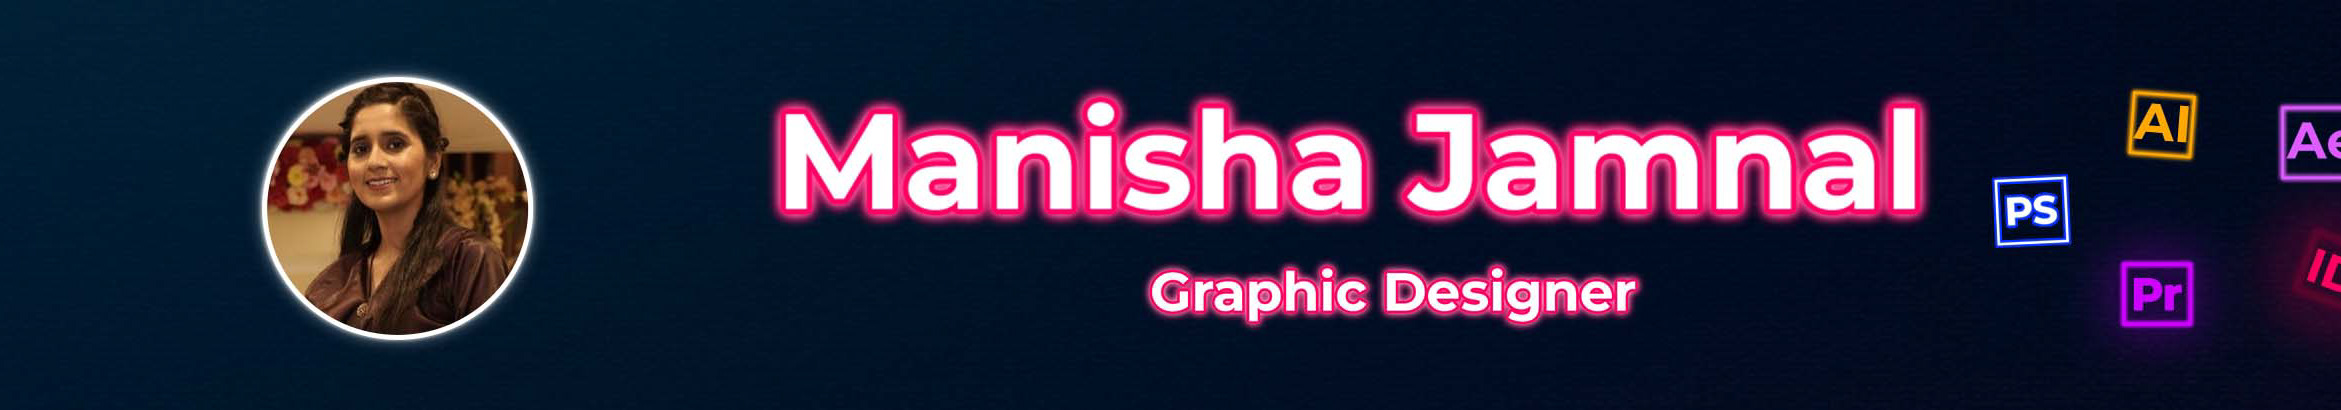 Manisha Jamnals profilbanner